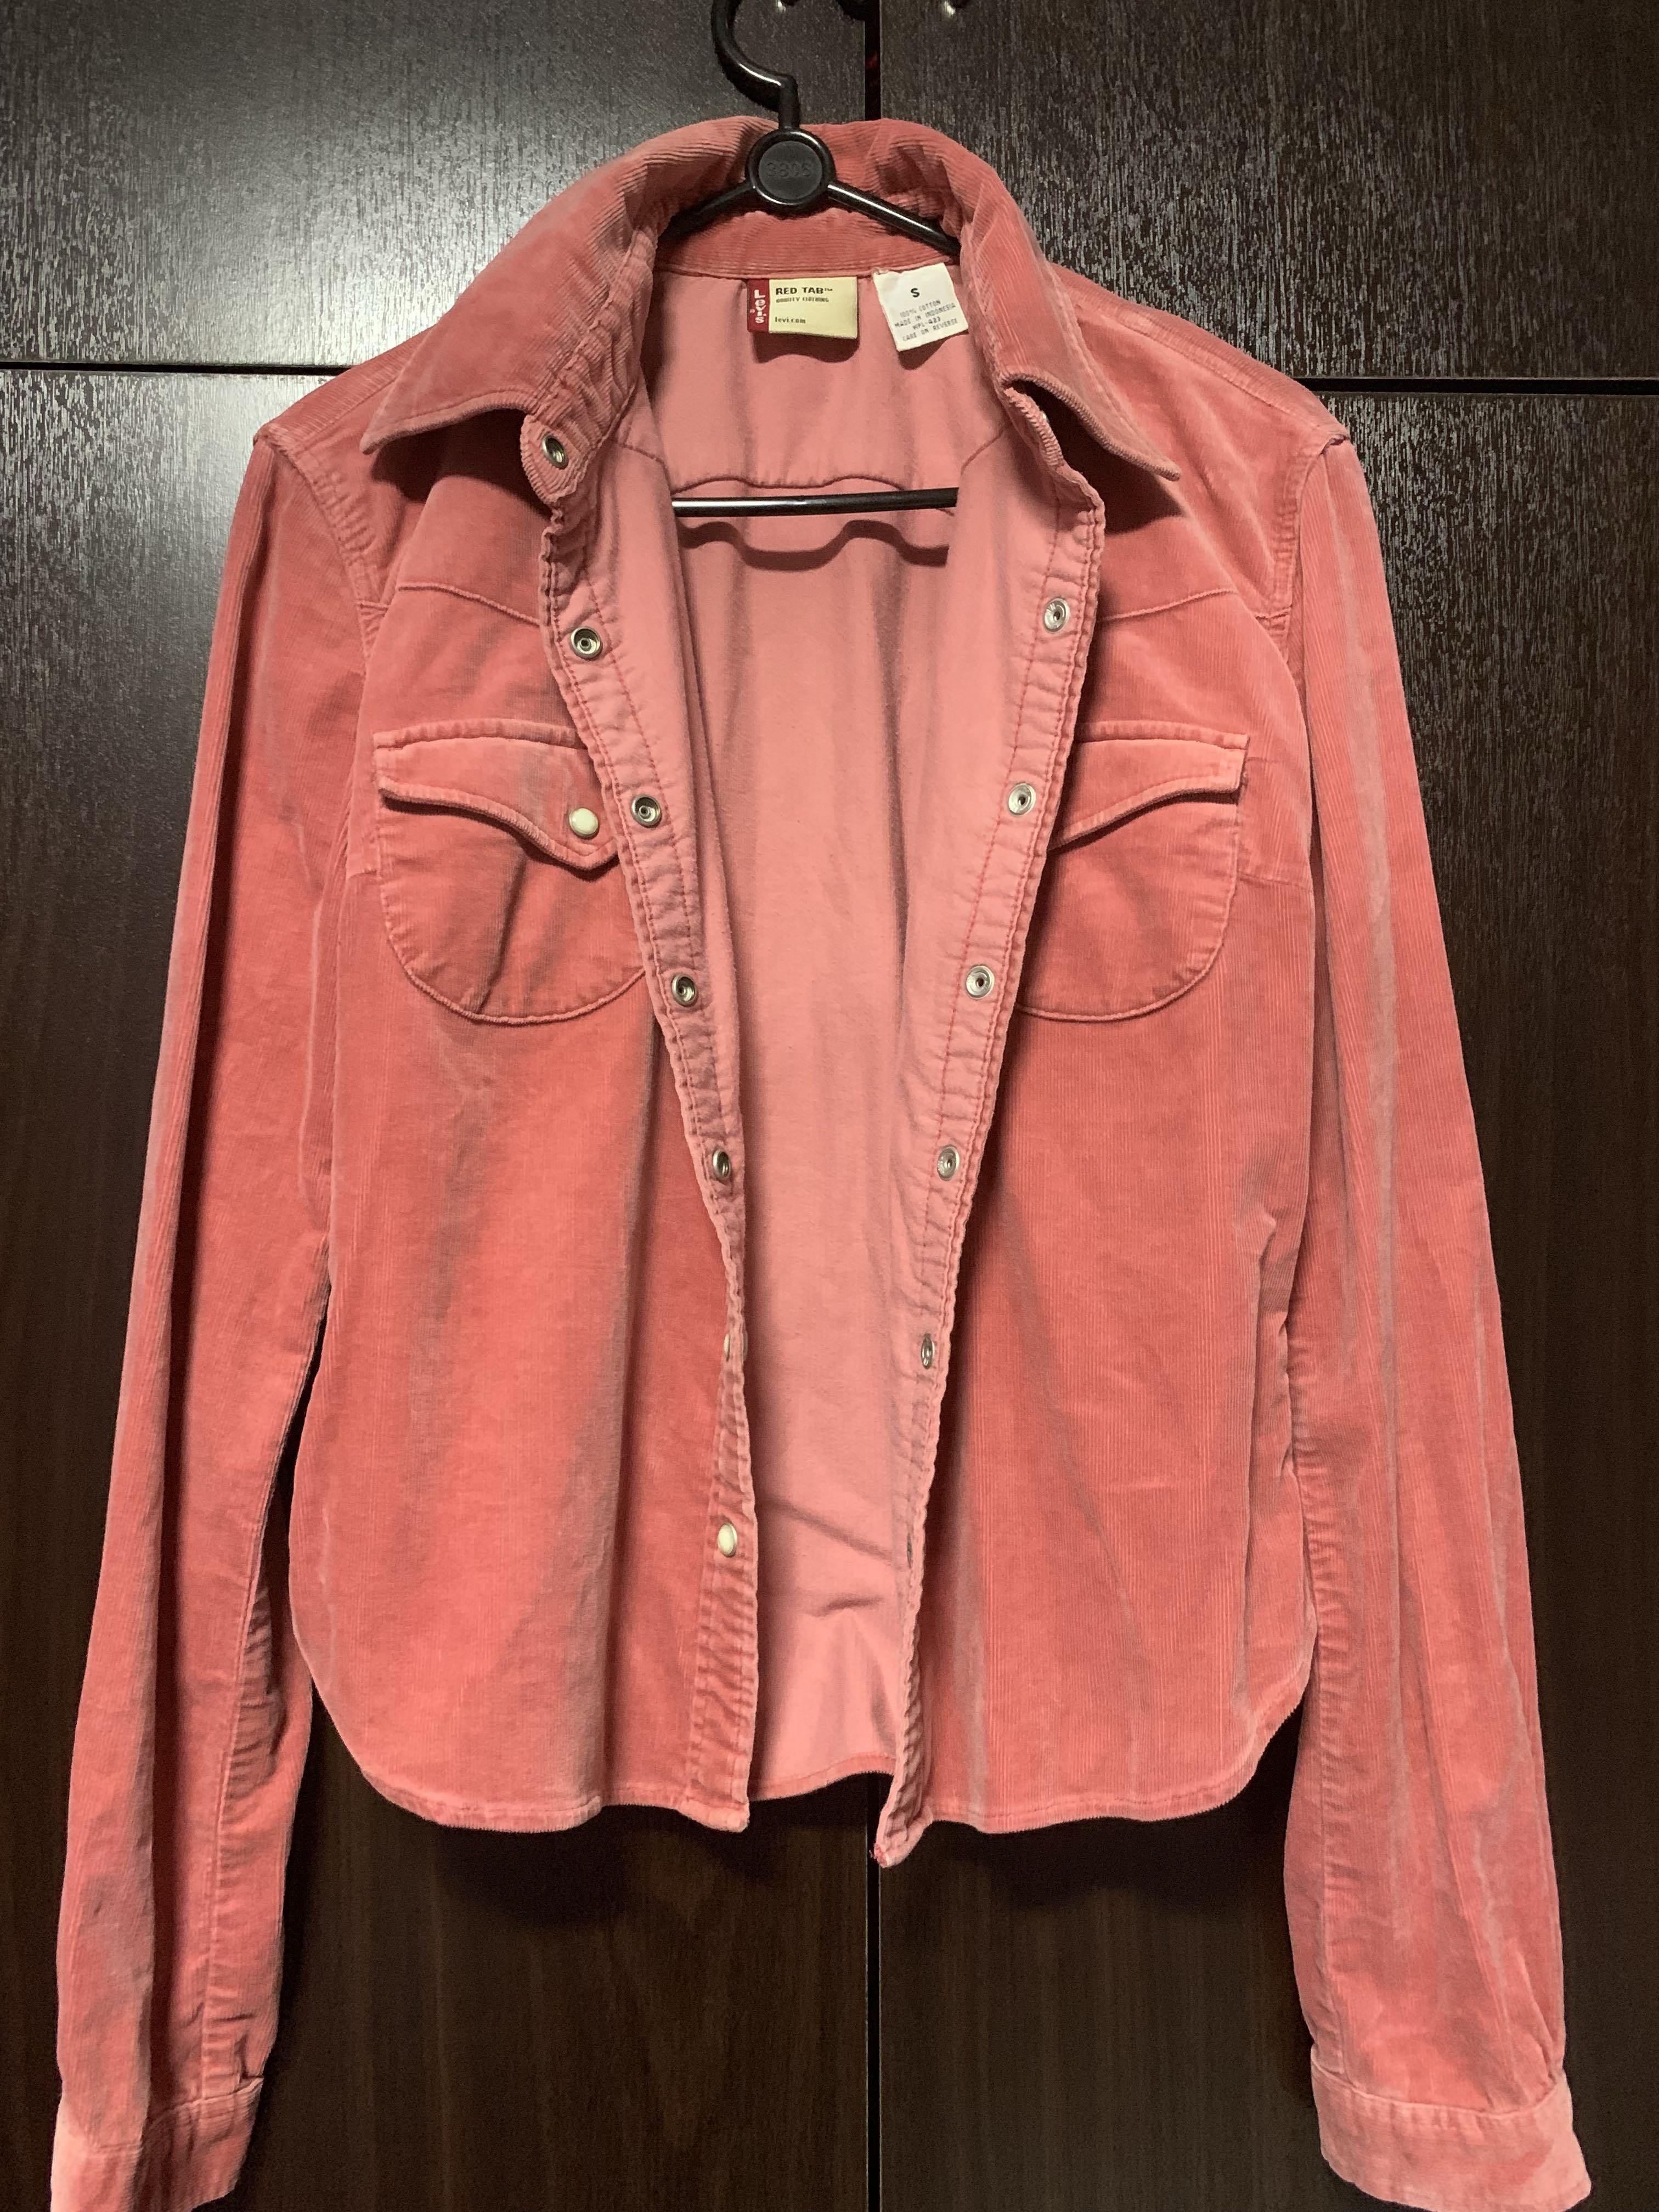 pink levis jacket